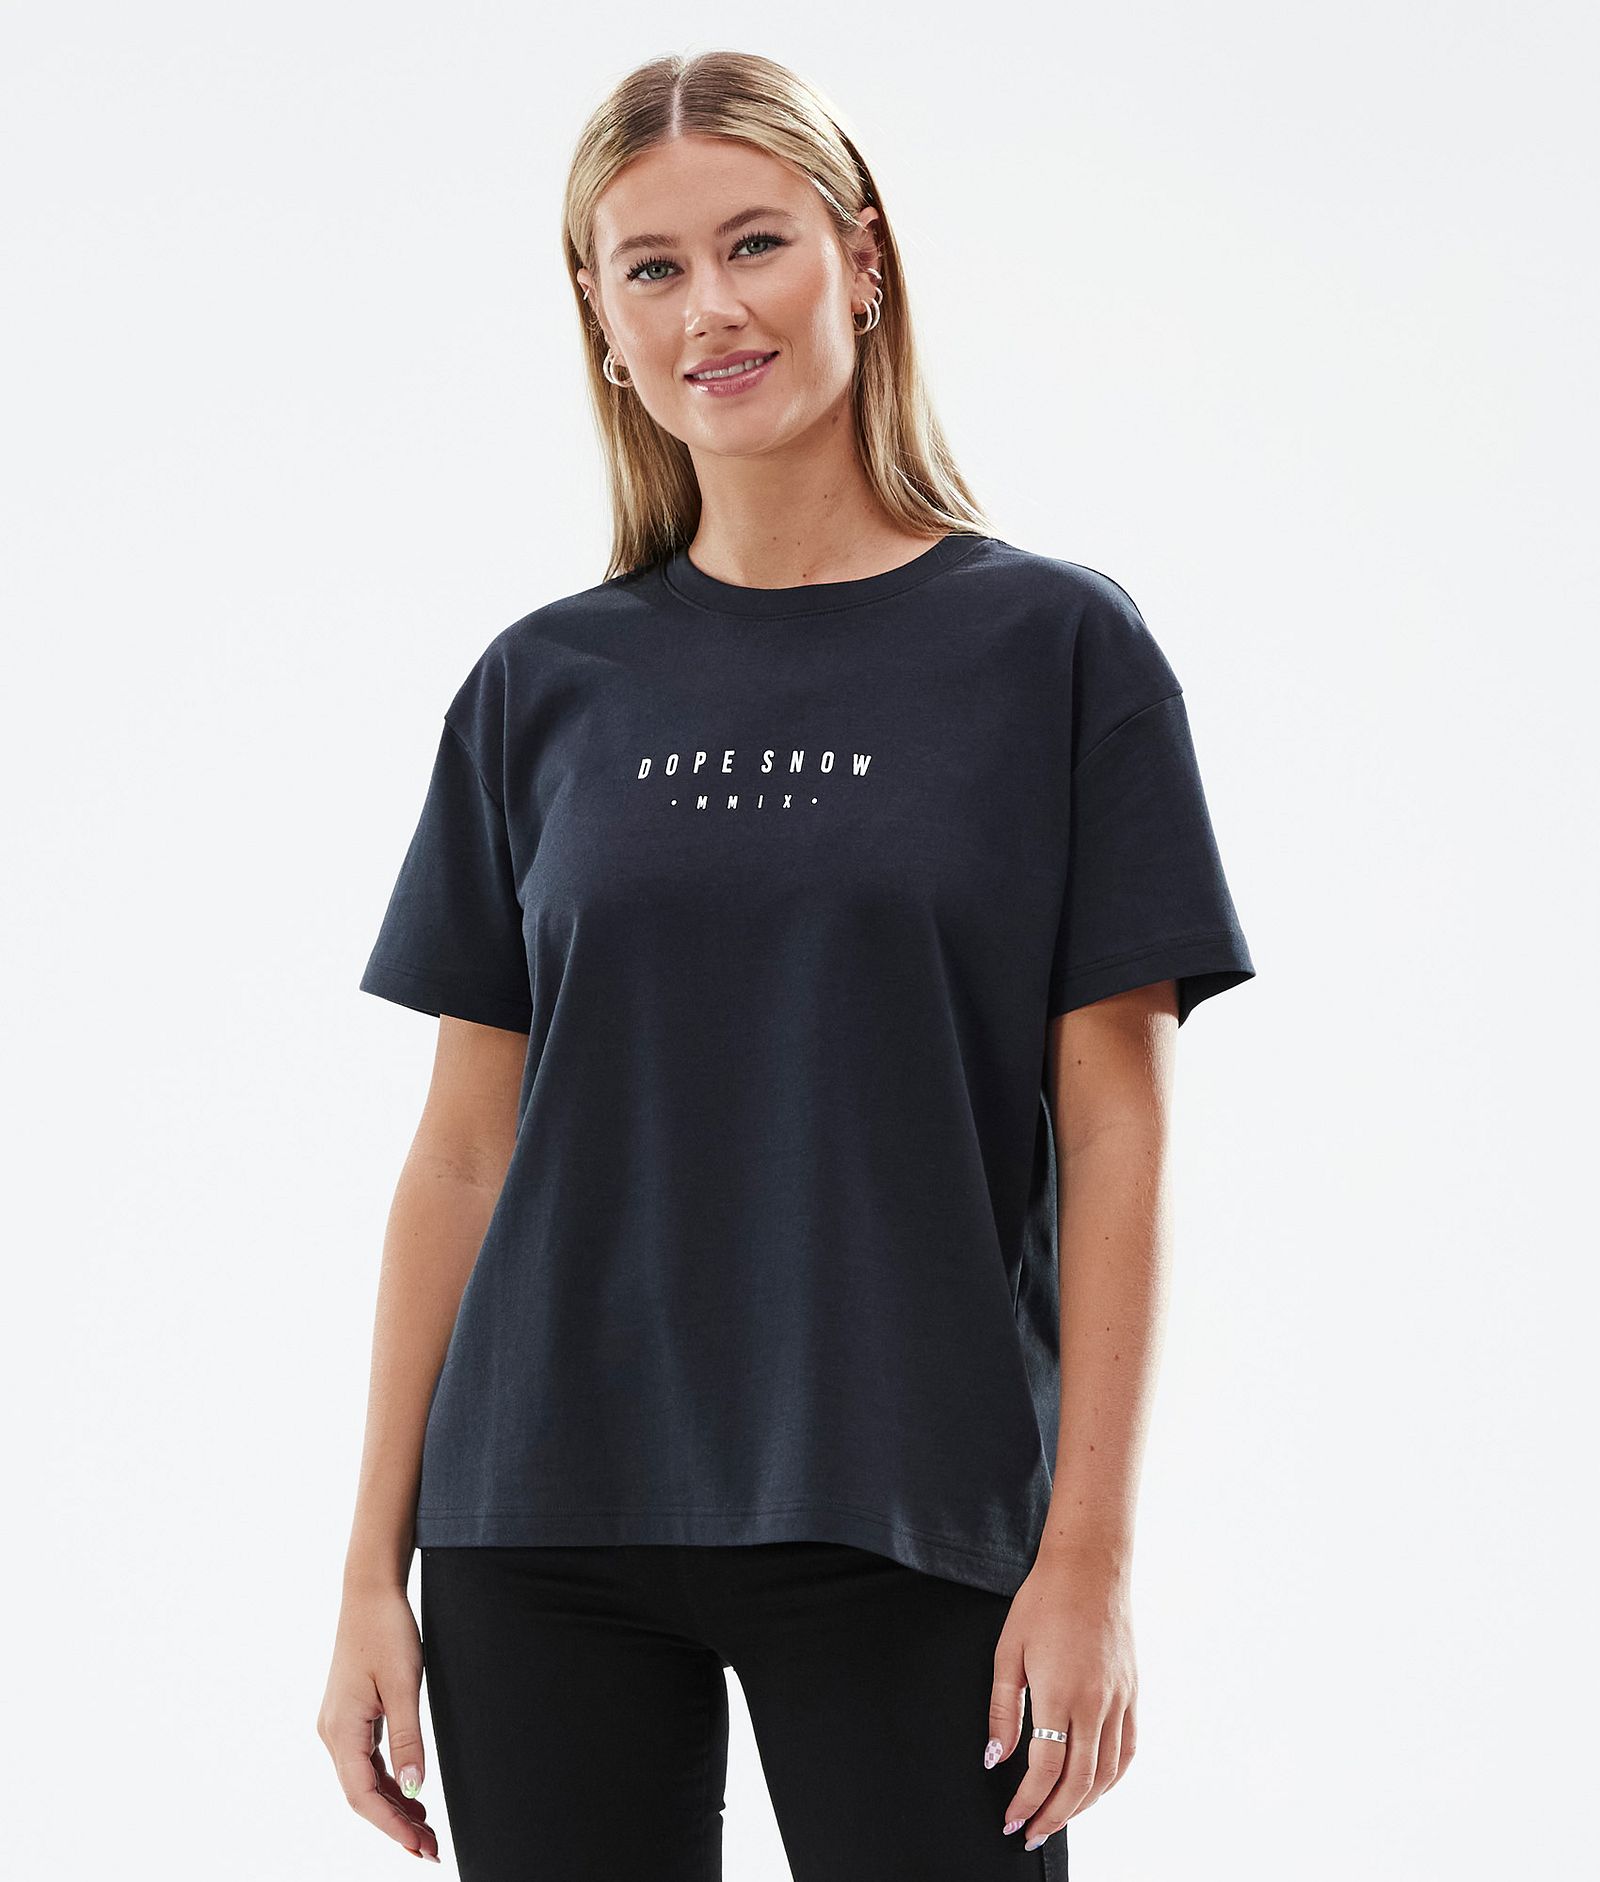 Standard W 2022 T-shirt Femme Range Black